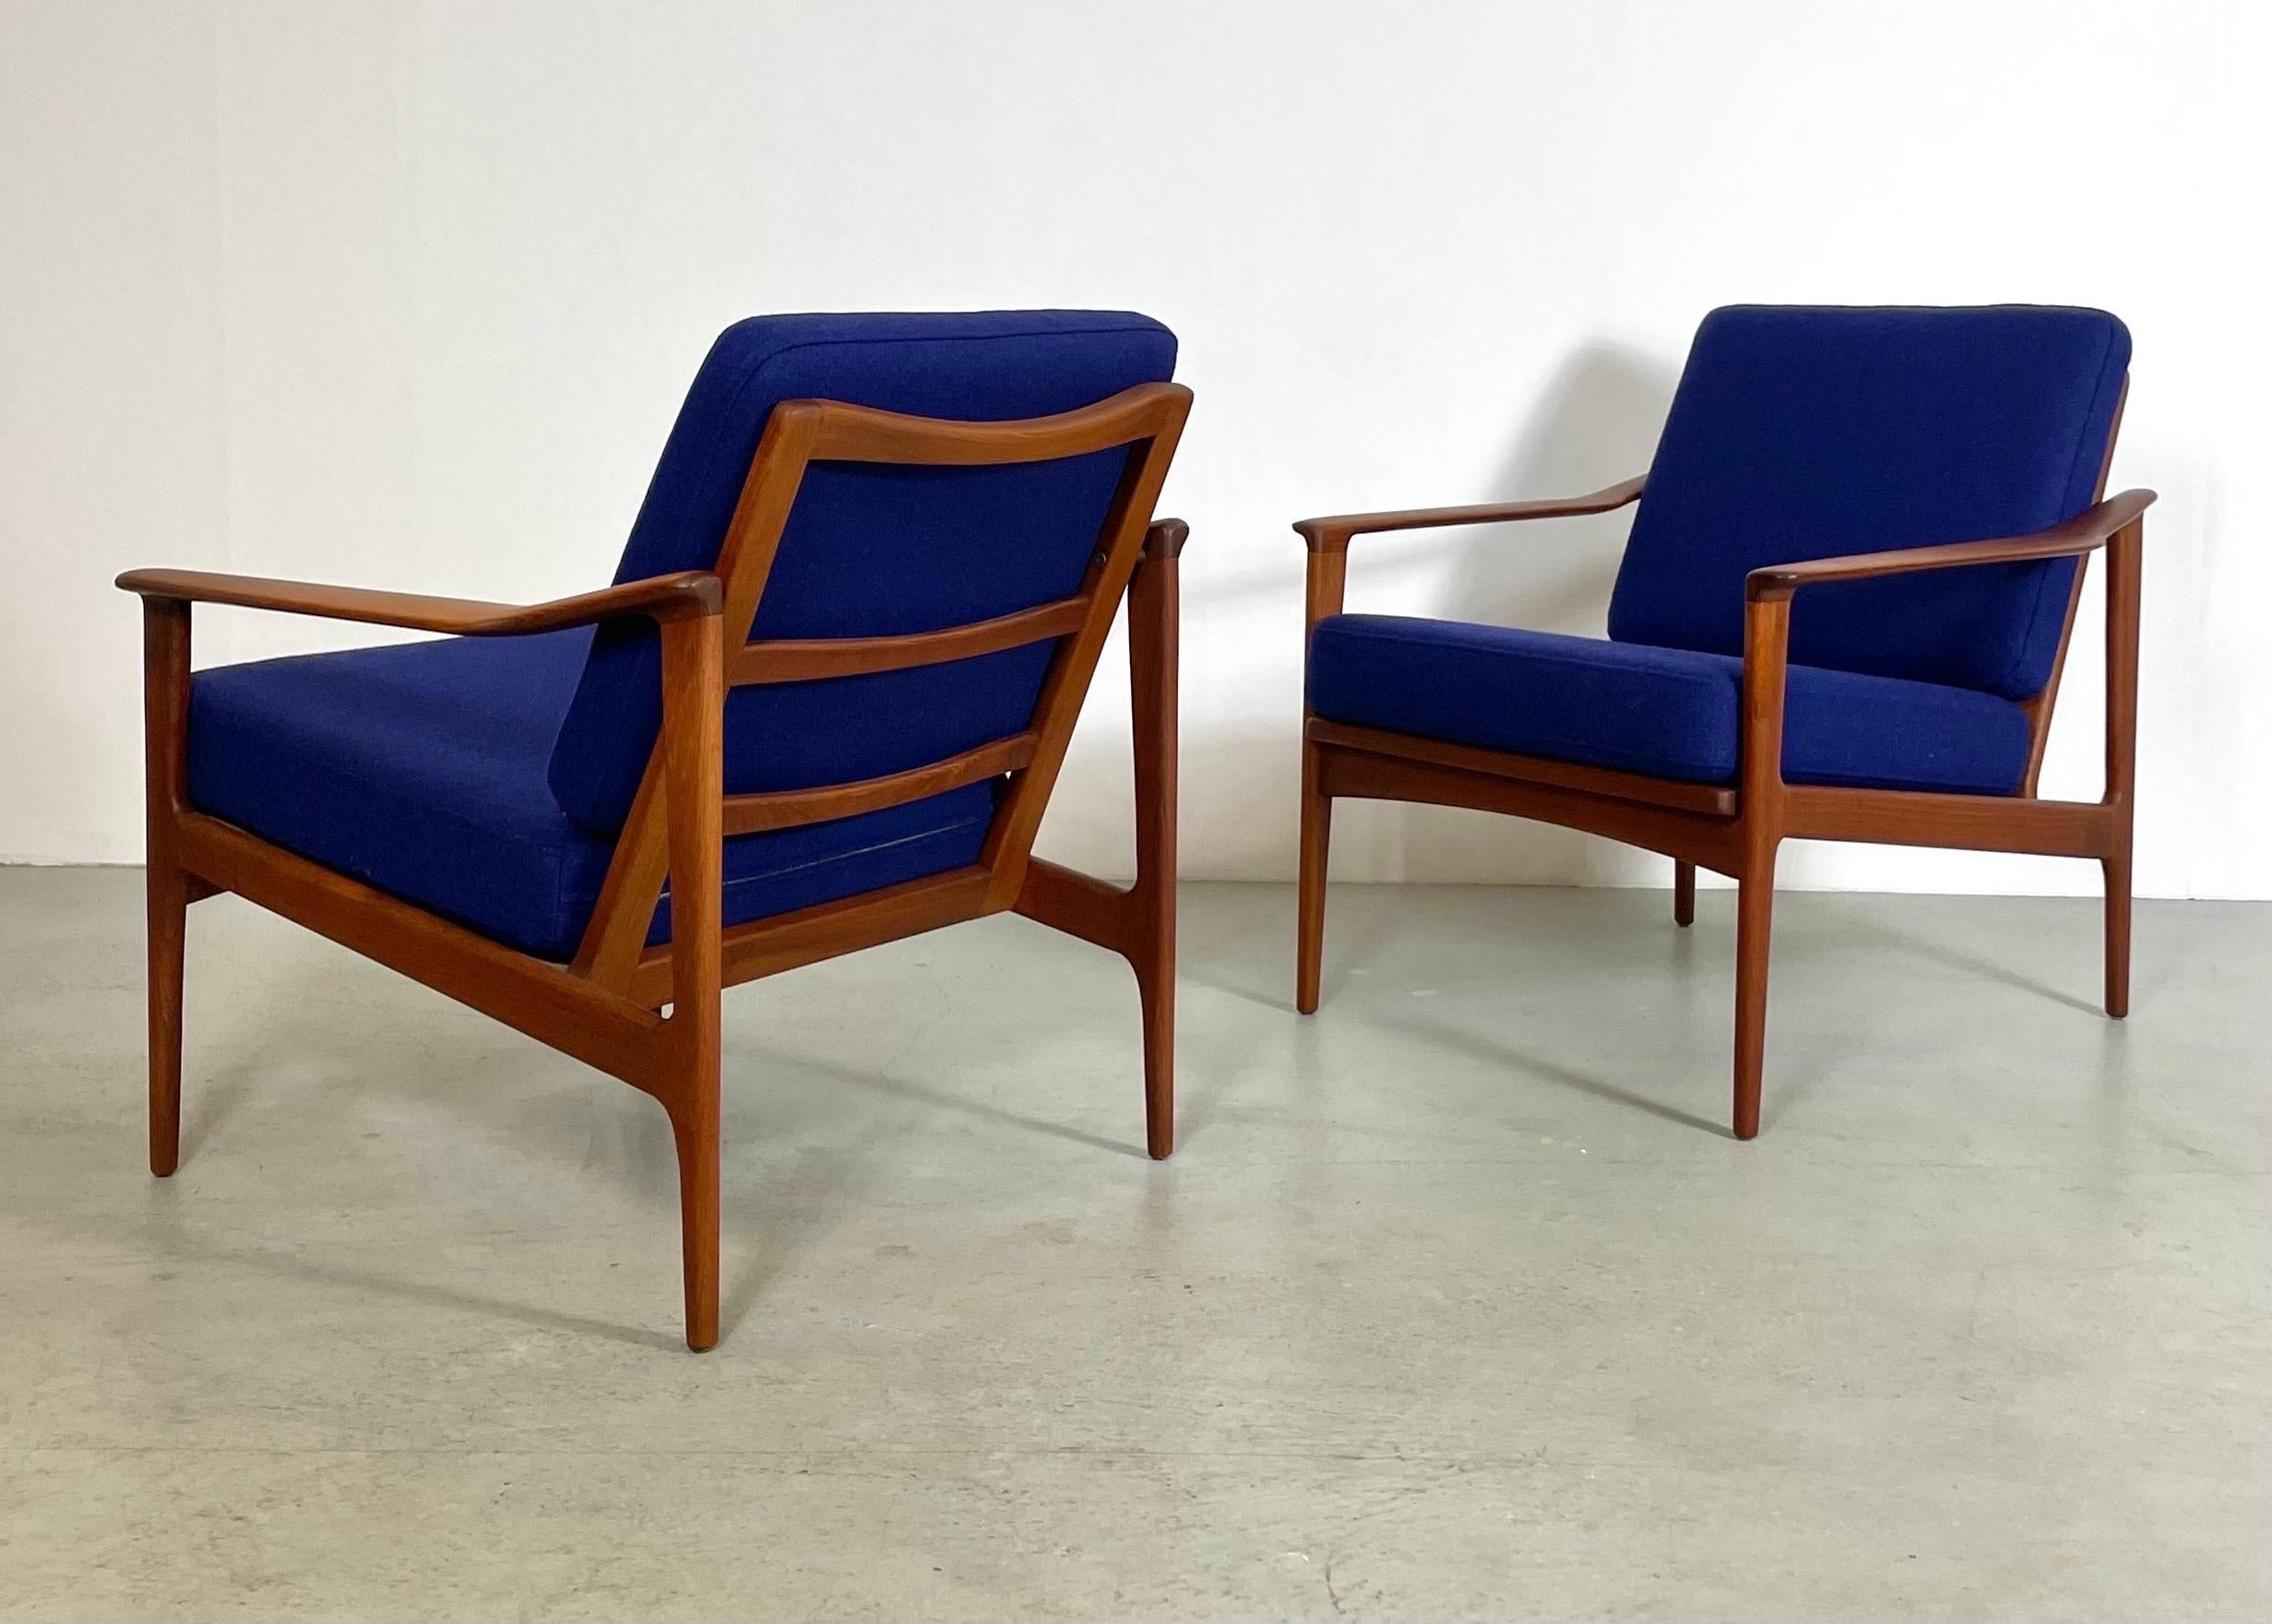 2x Mid-Century Teak Easy Chair by Ib Kofod-Larsen 1960s Denmark For Sale 5